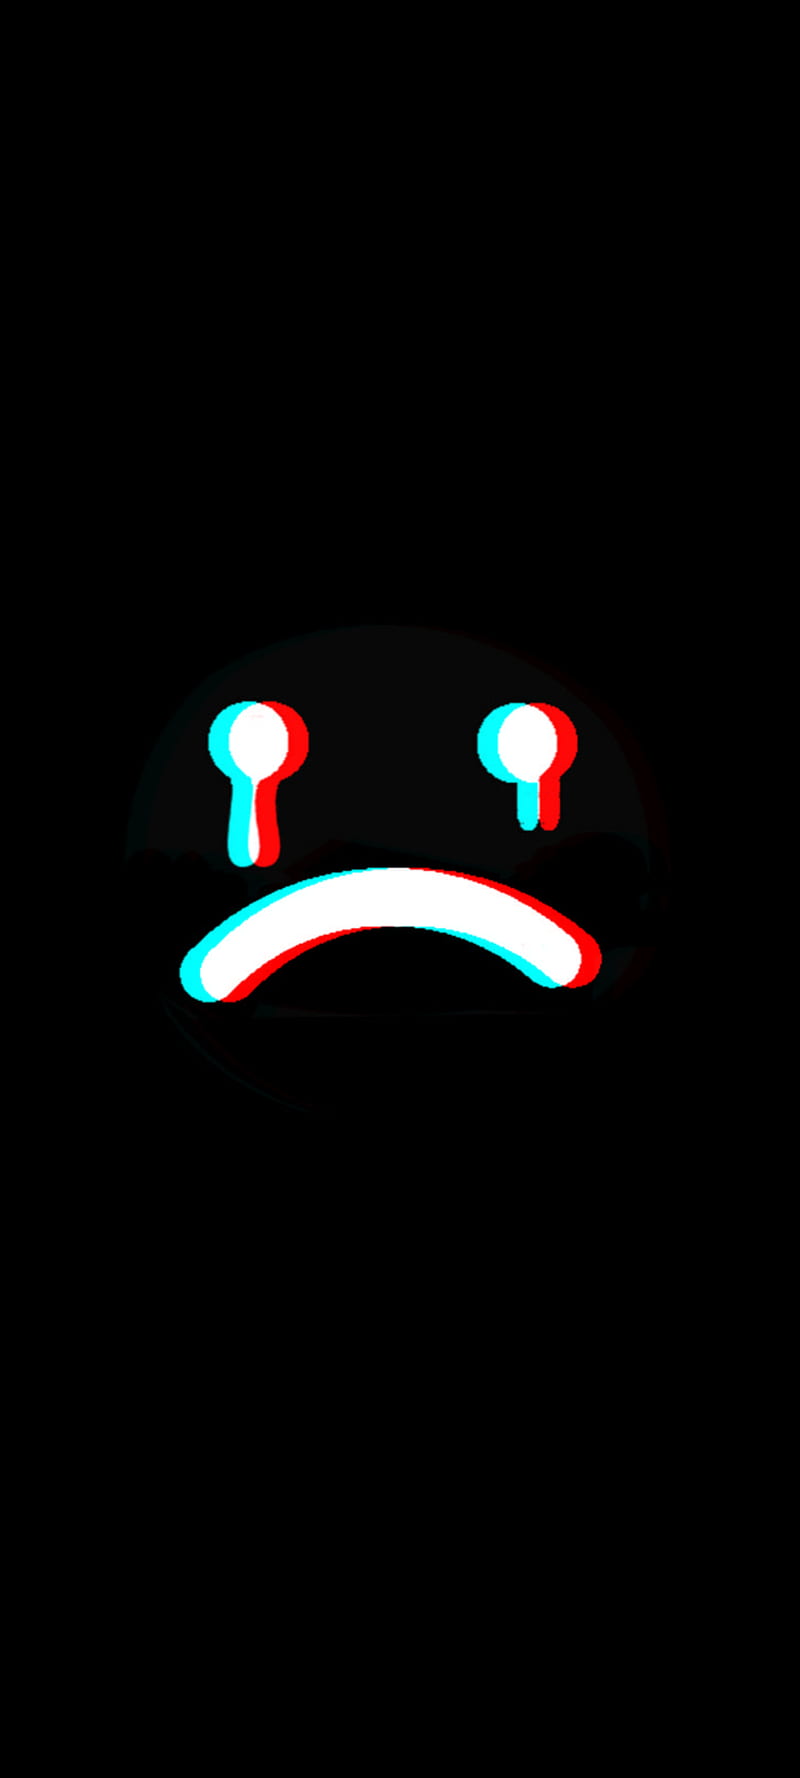 Sad emoji wallpaper by beniscool1215  Download on ZEDGE  d4ad